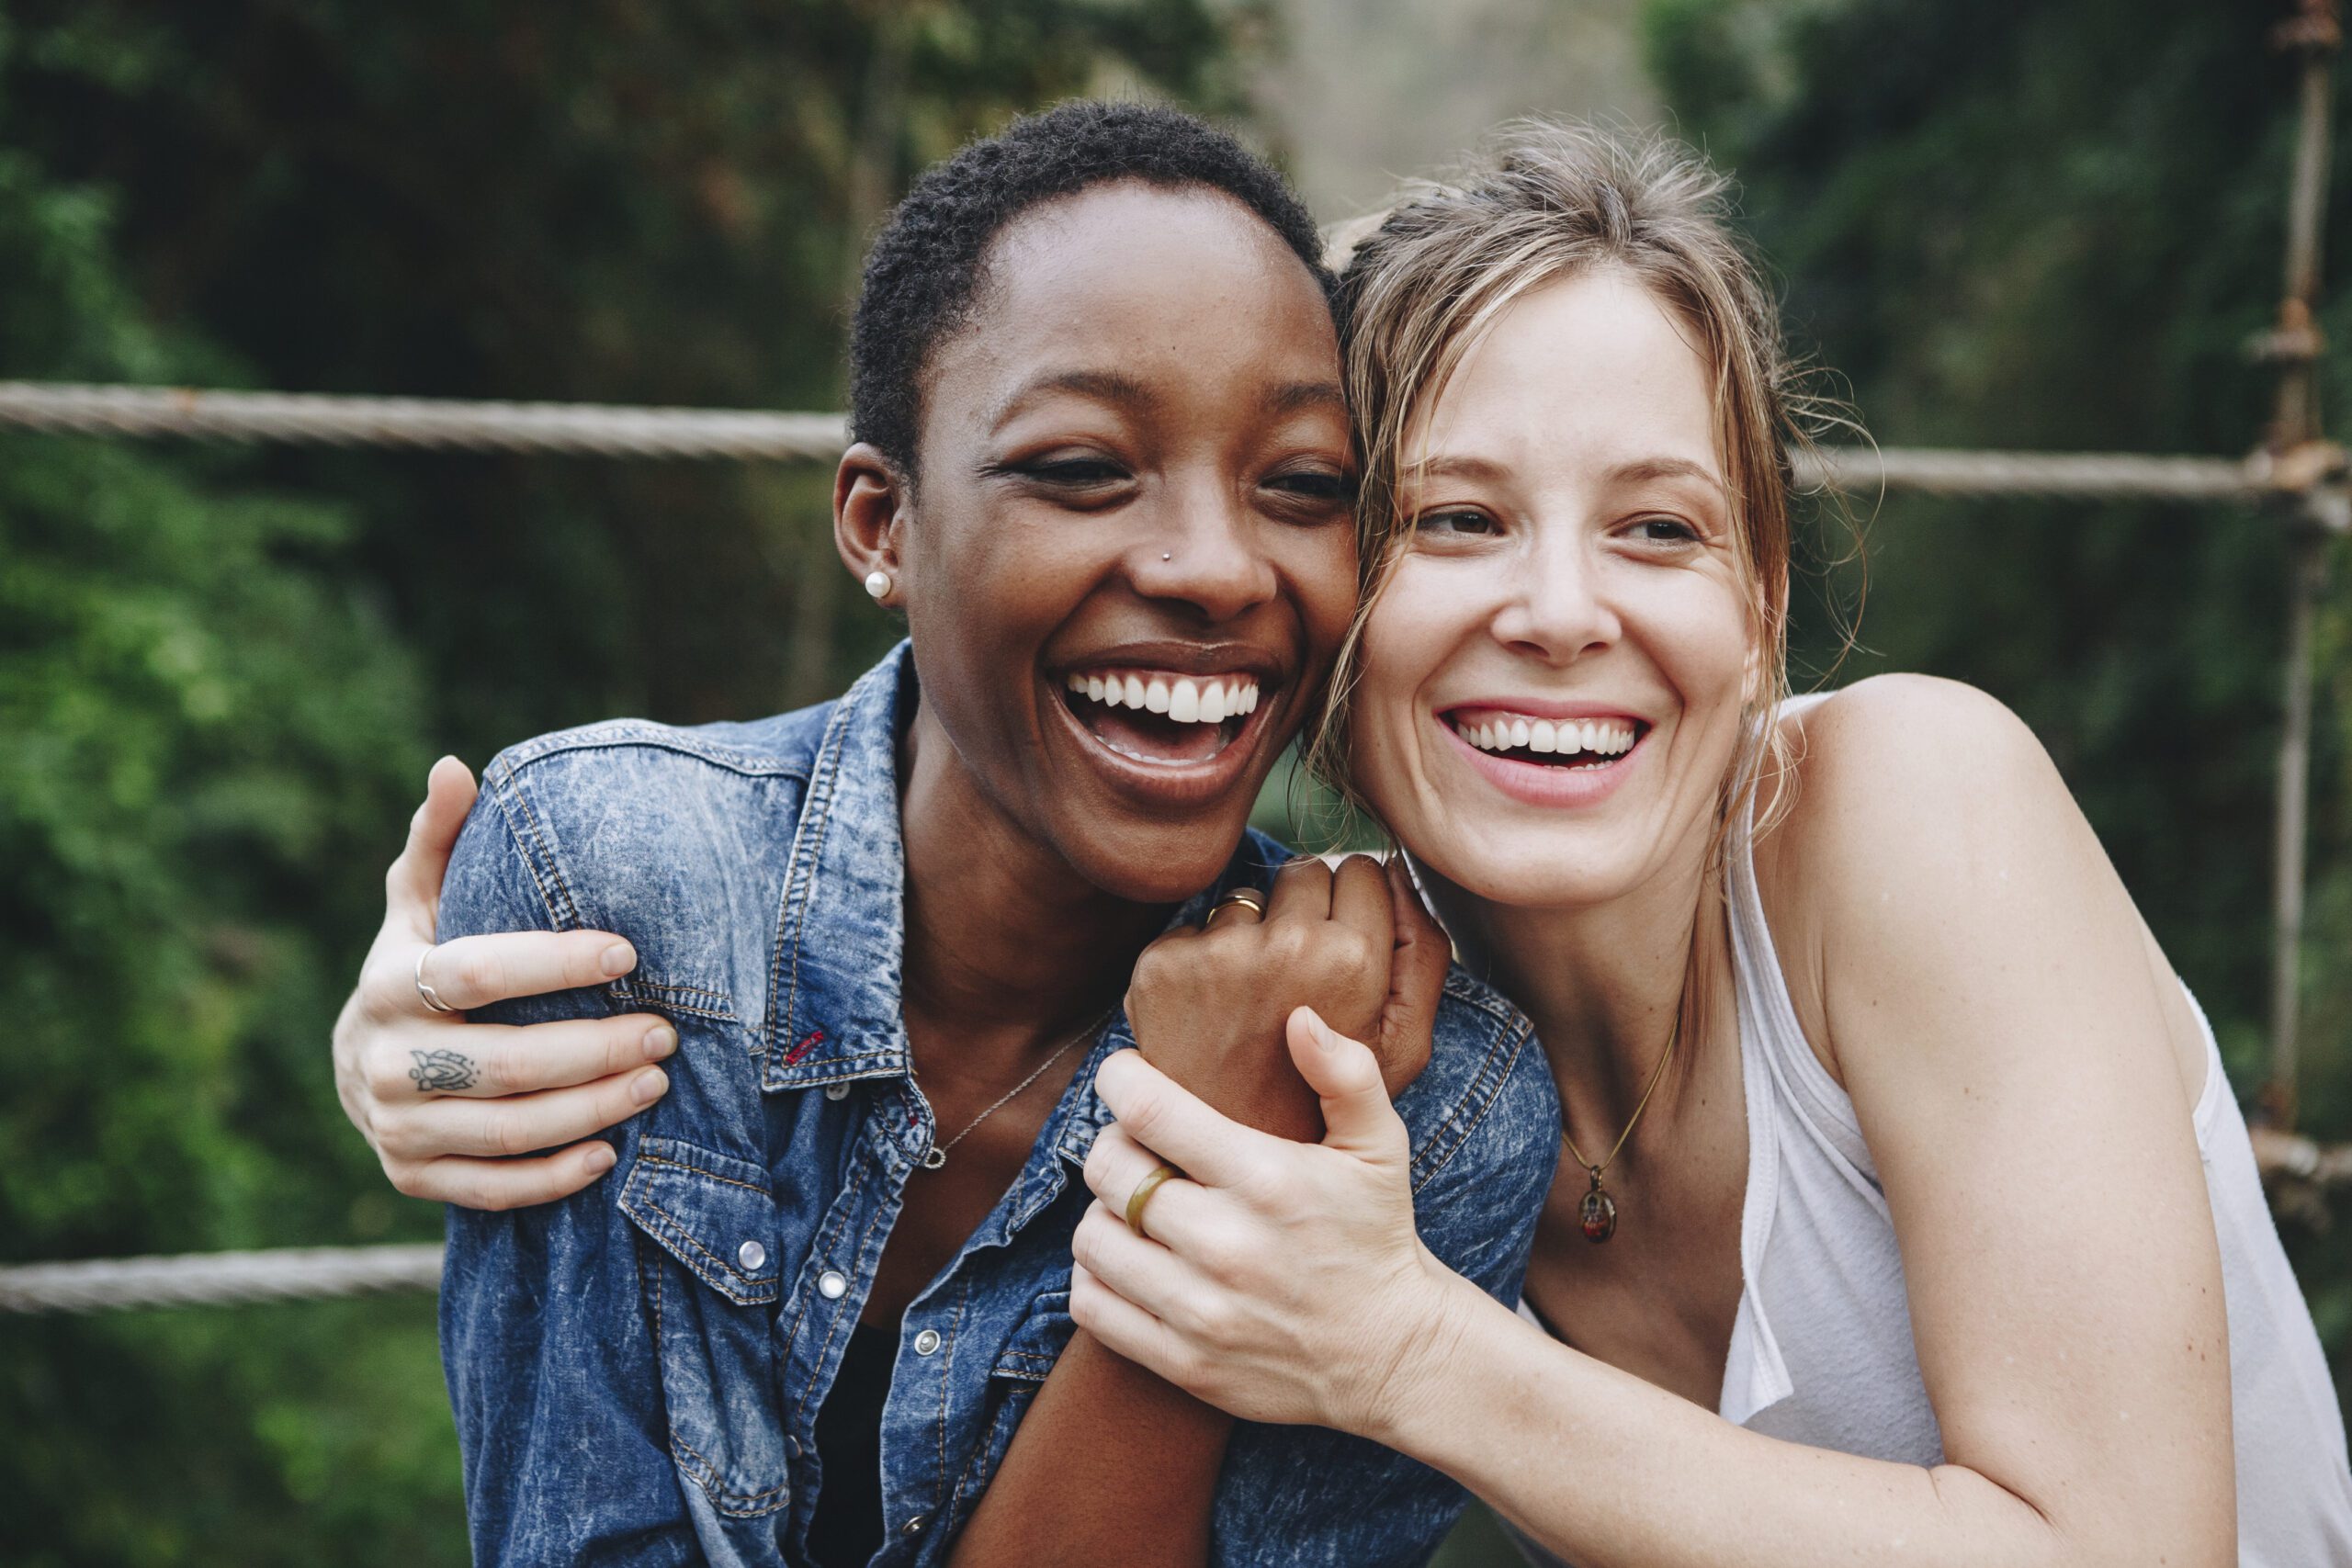 Duas mulheres sorrindo tendo autocuidado feminino.